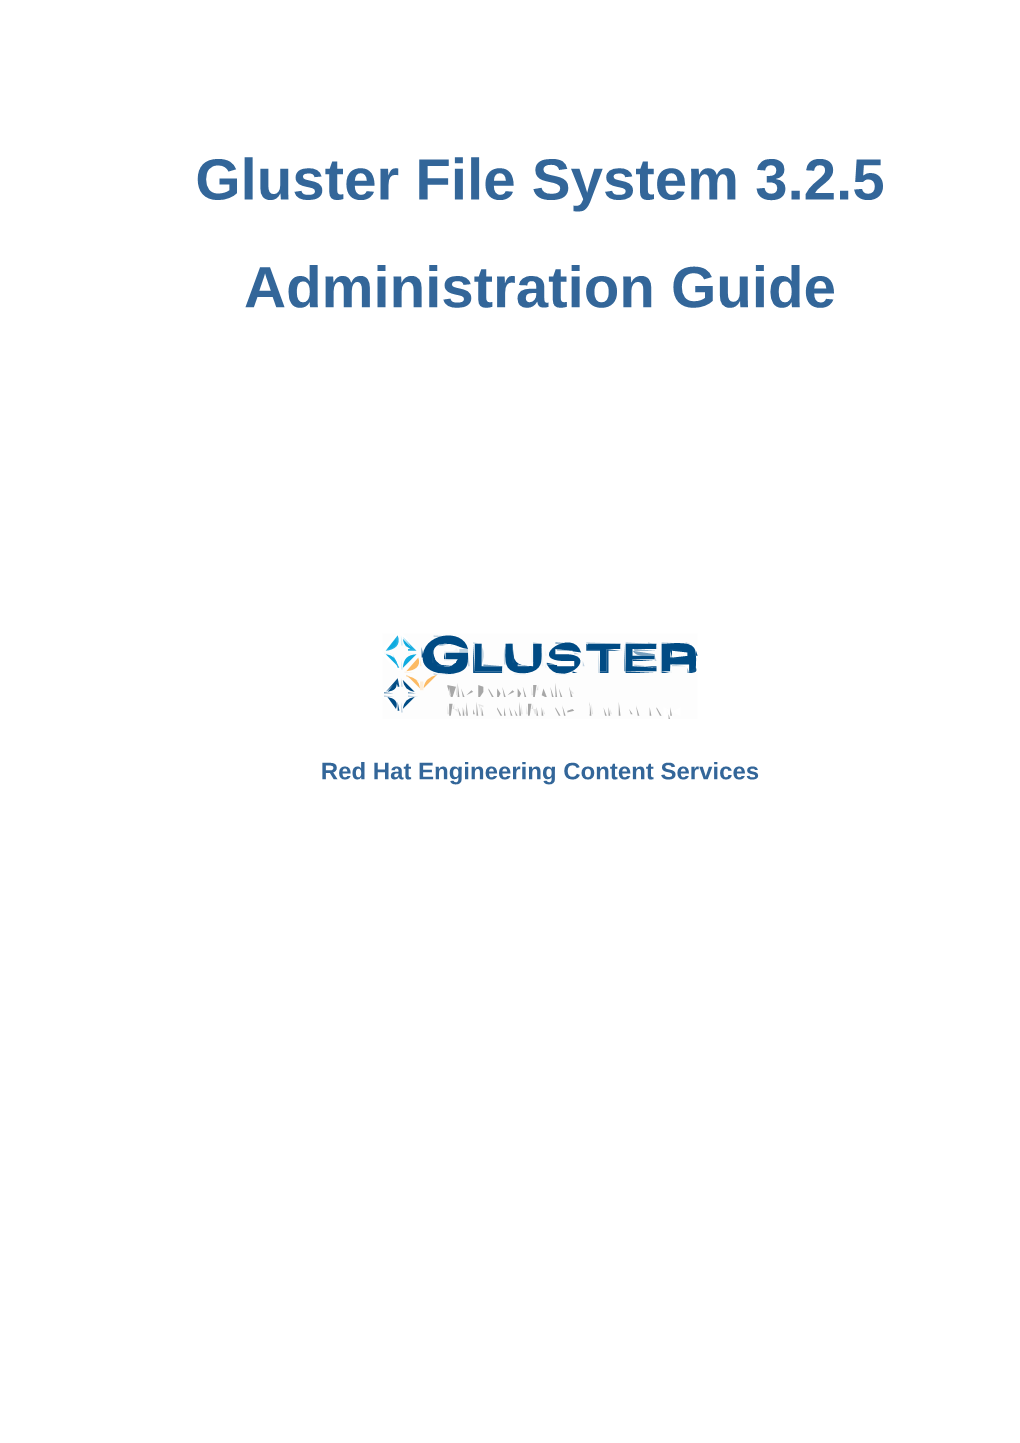 Gluster File System 3.2.5 Administration Guide